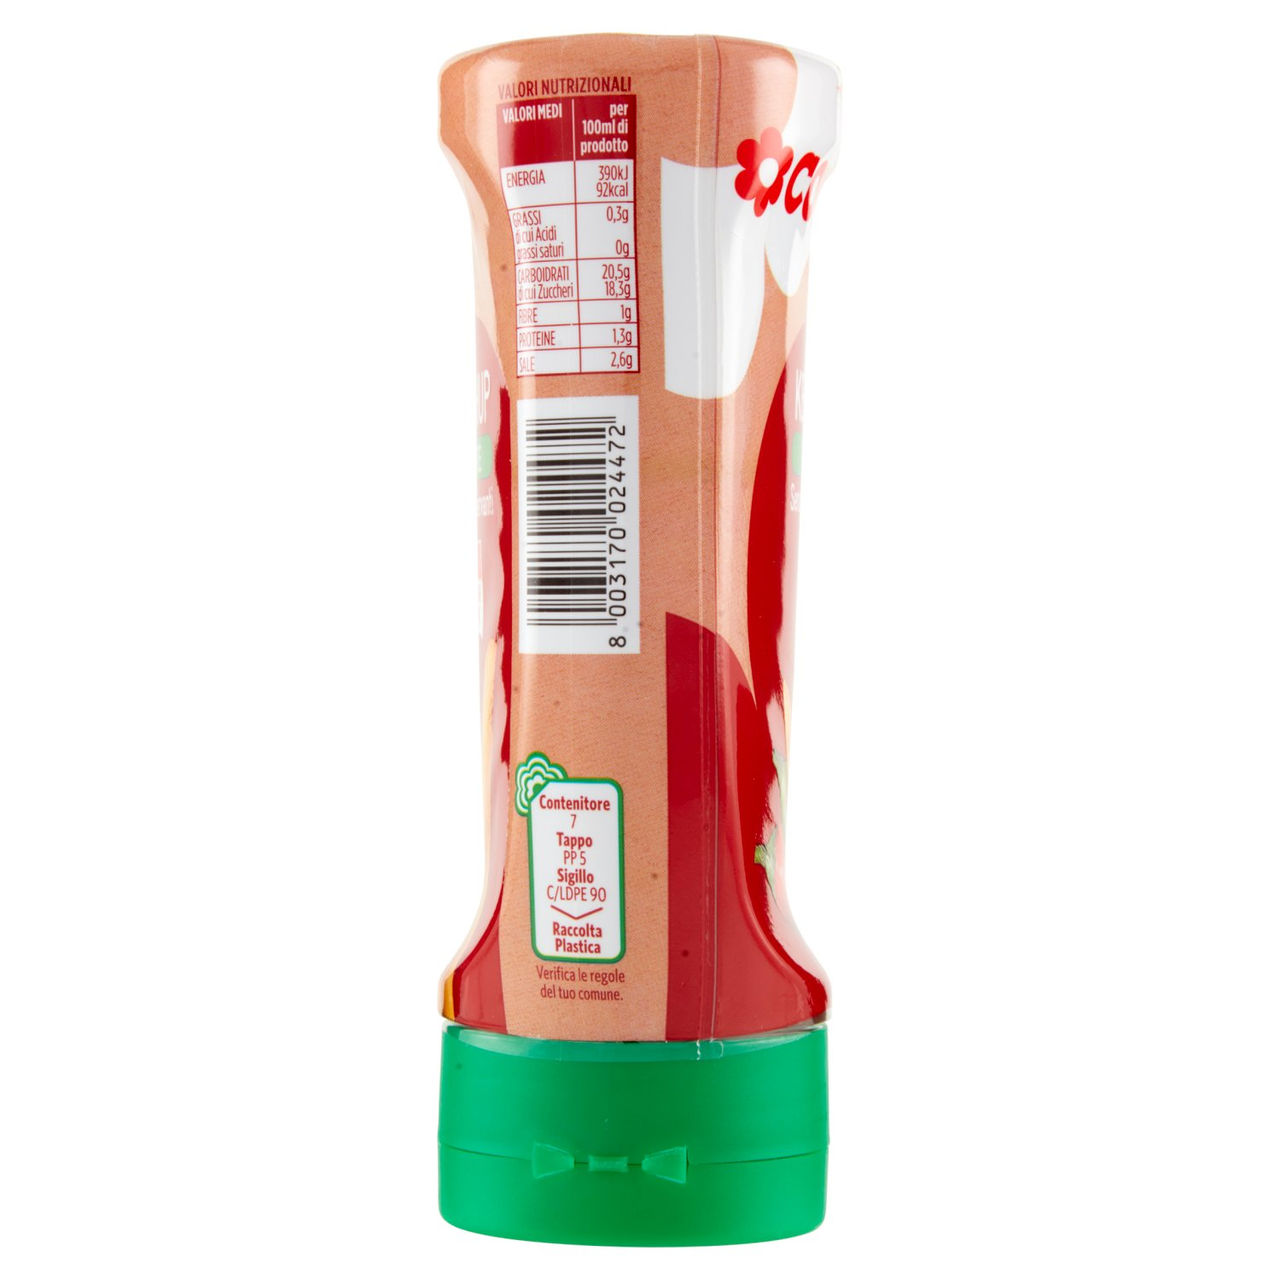 Ketchup Piccante 280 g Conad in vendita online